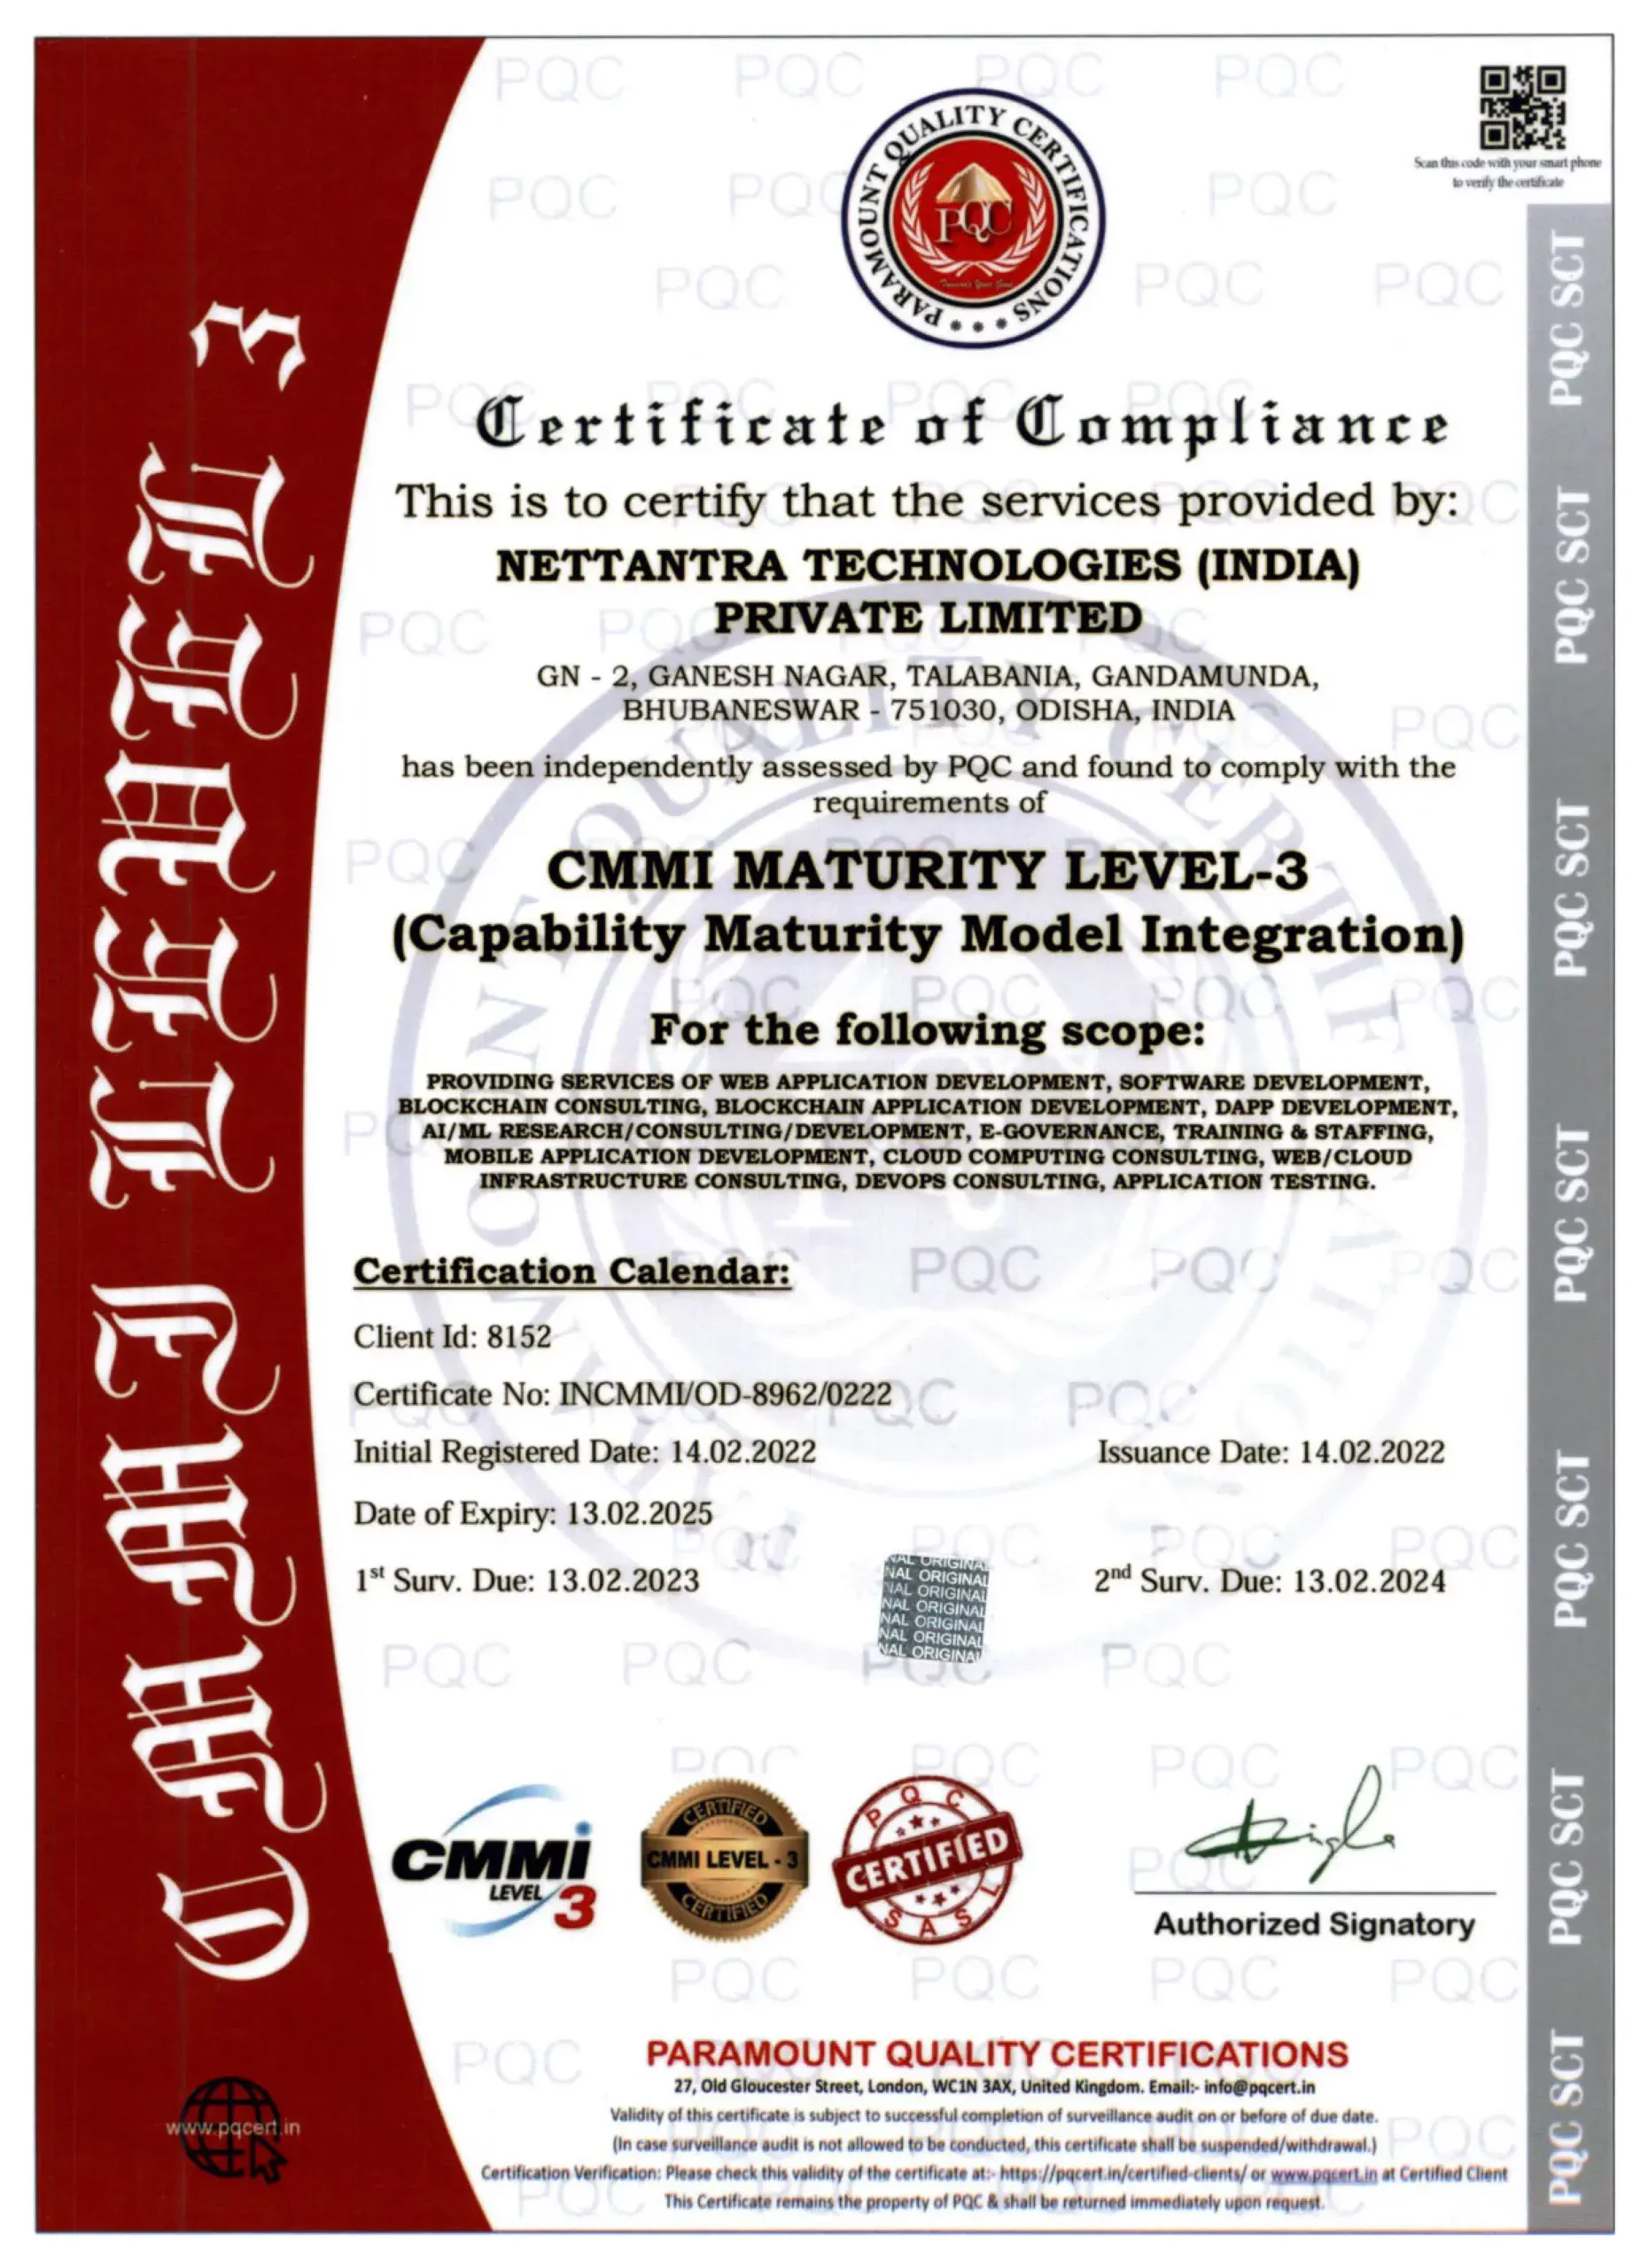 NetTantra - CMMI Maturity Level-3 Certification